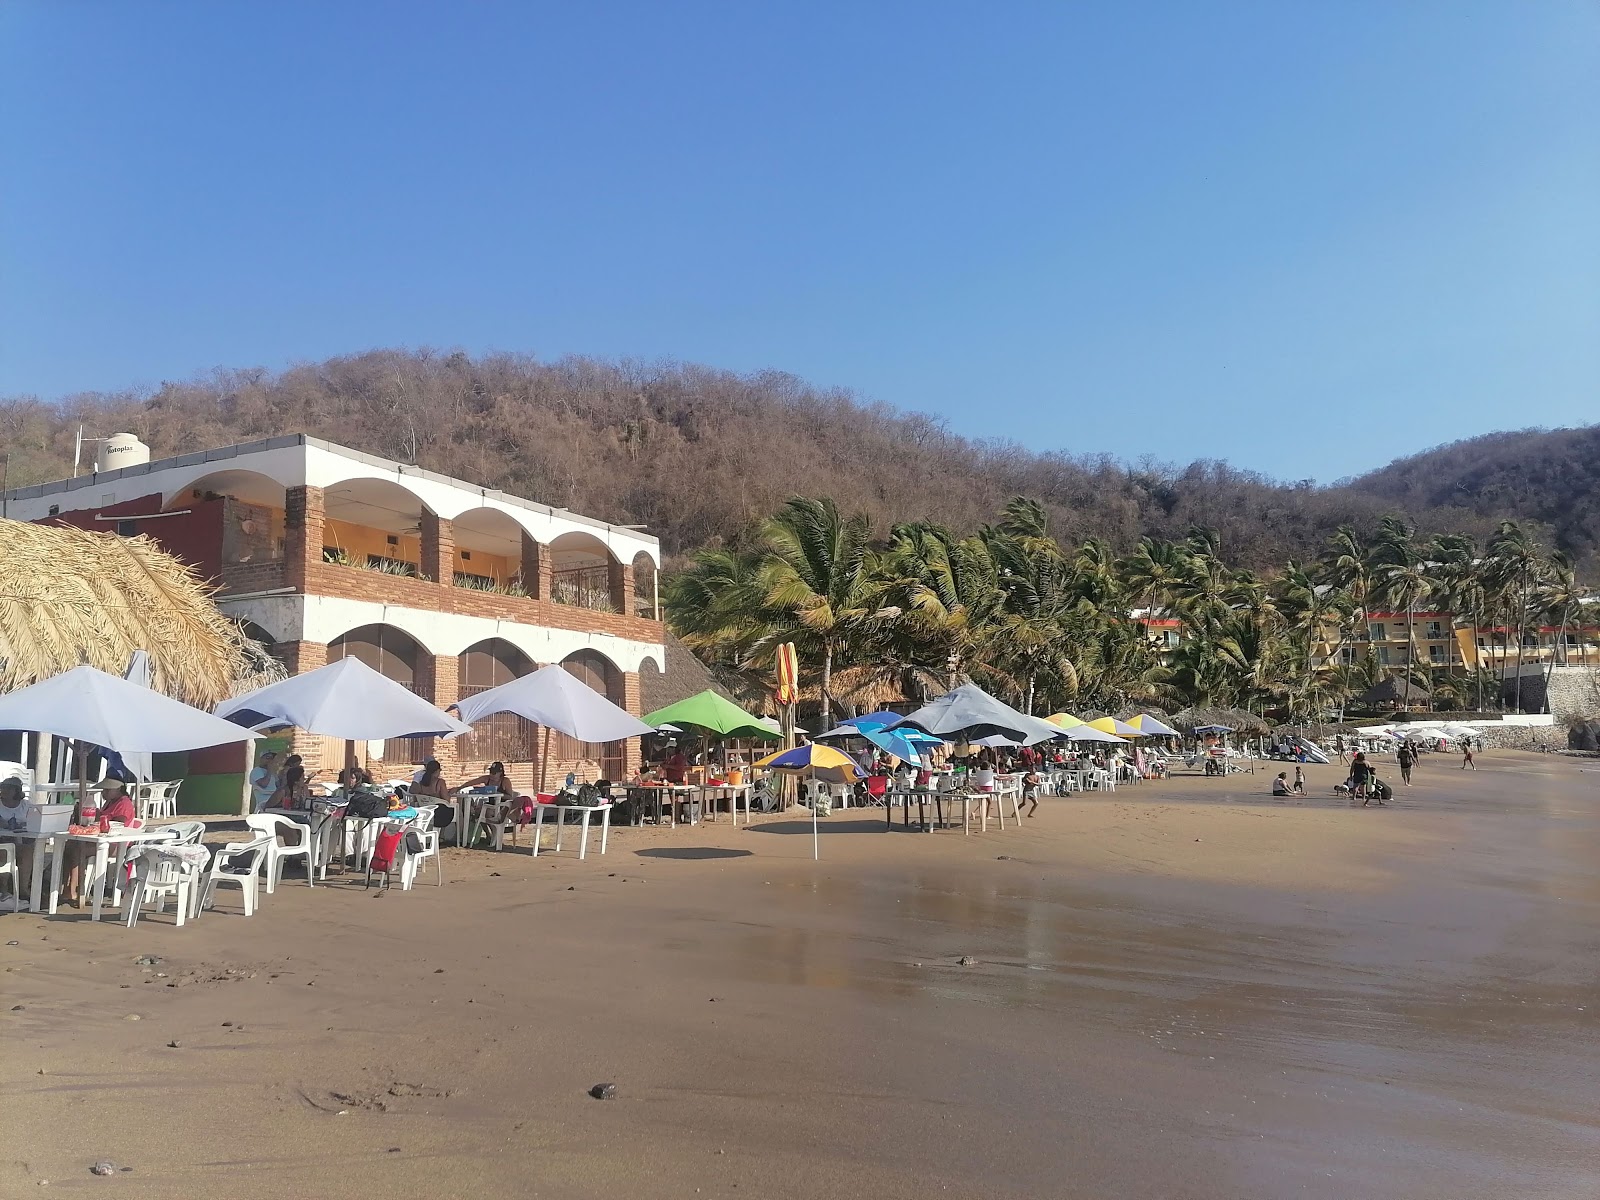 Foto af Playa Cuastecomates faciliteter område